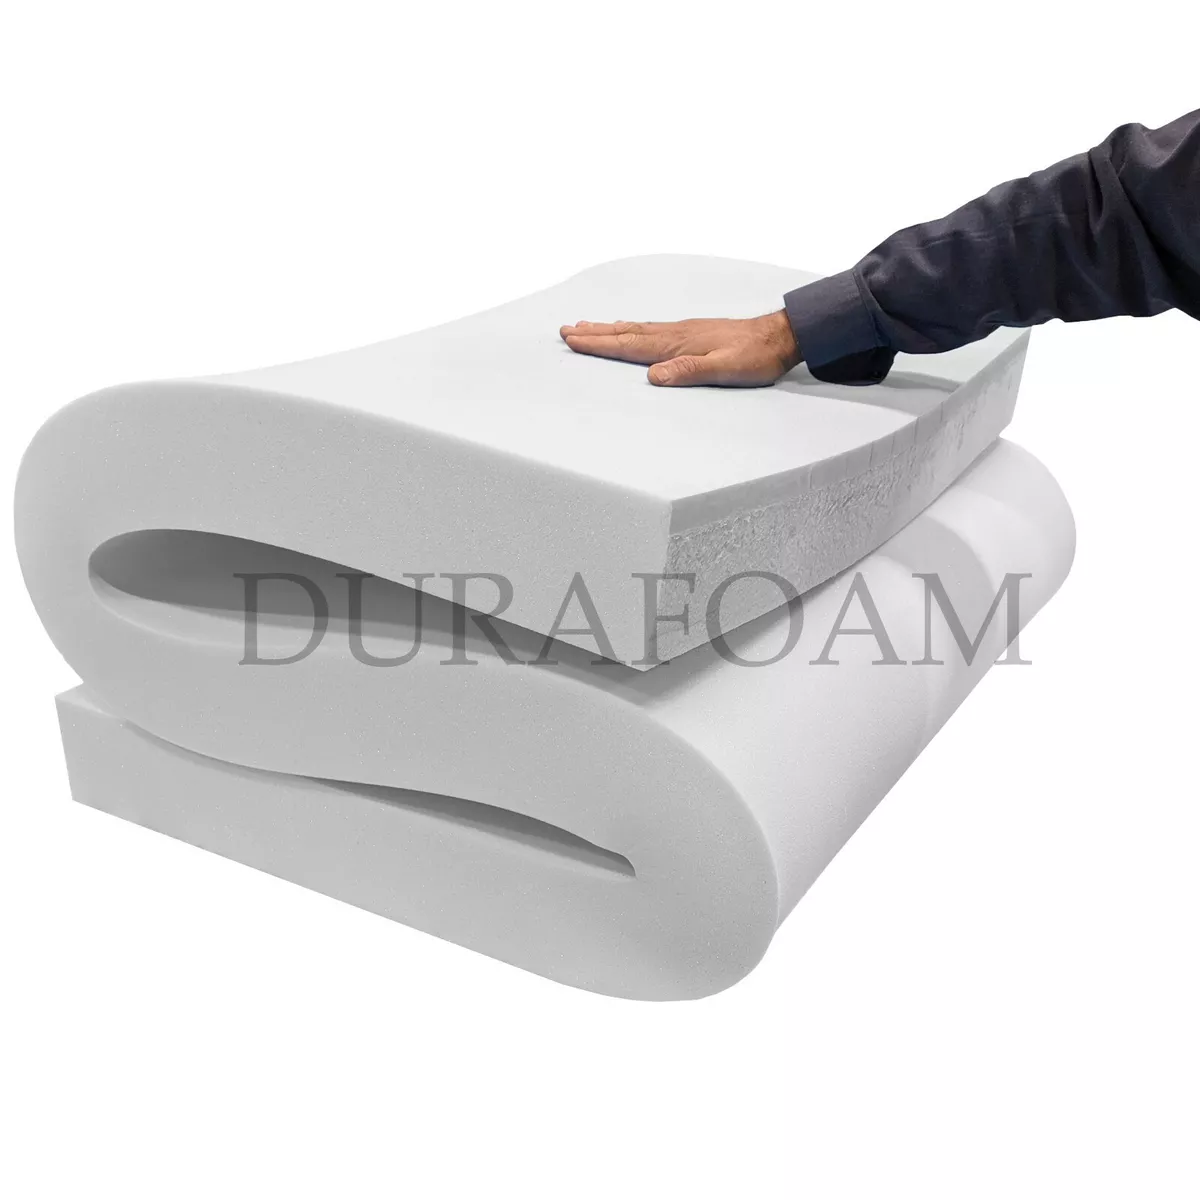 3 x 30 x 54 High Density Upholstery Foam